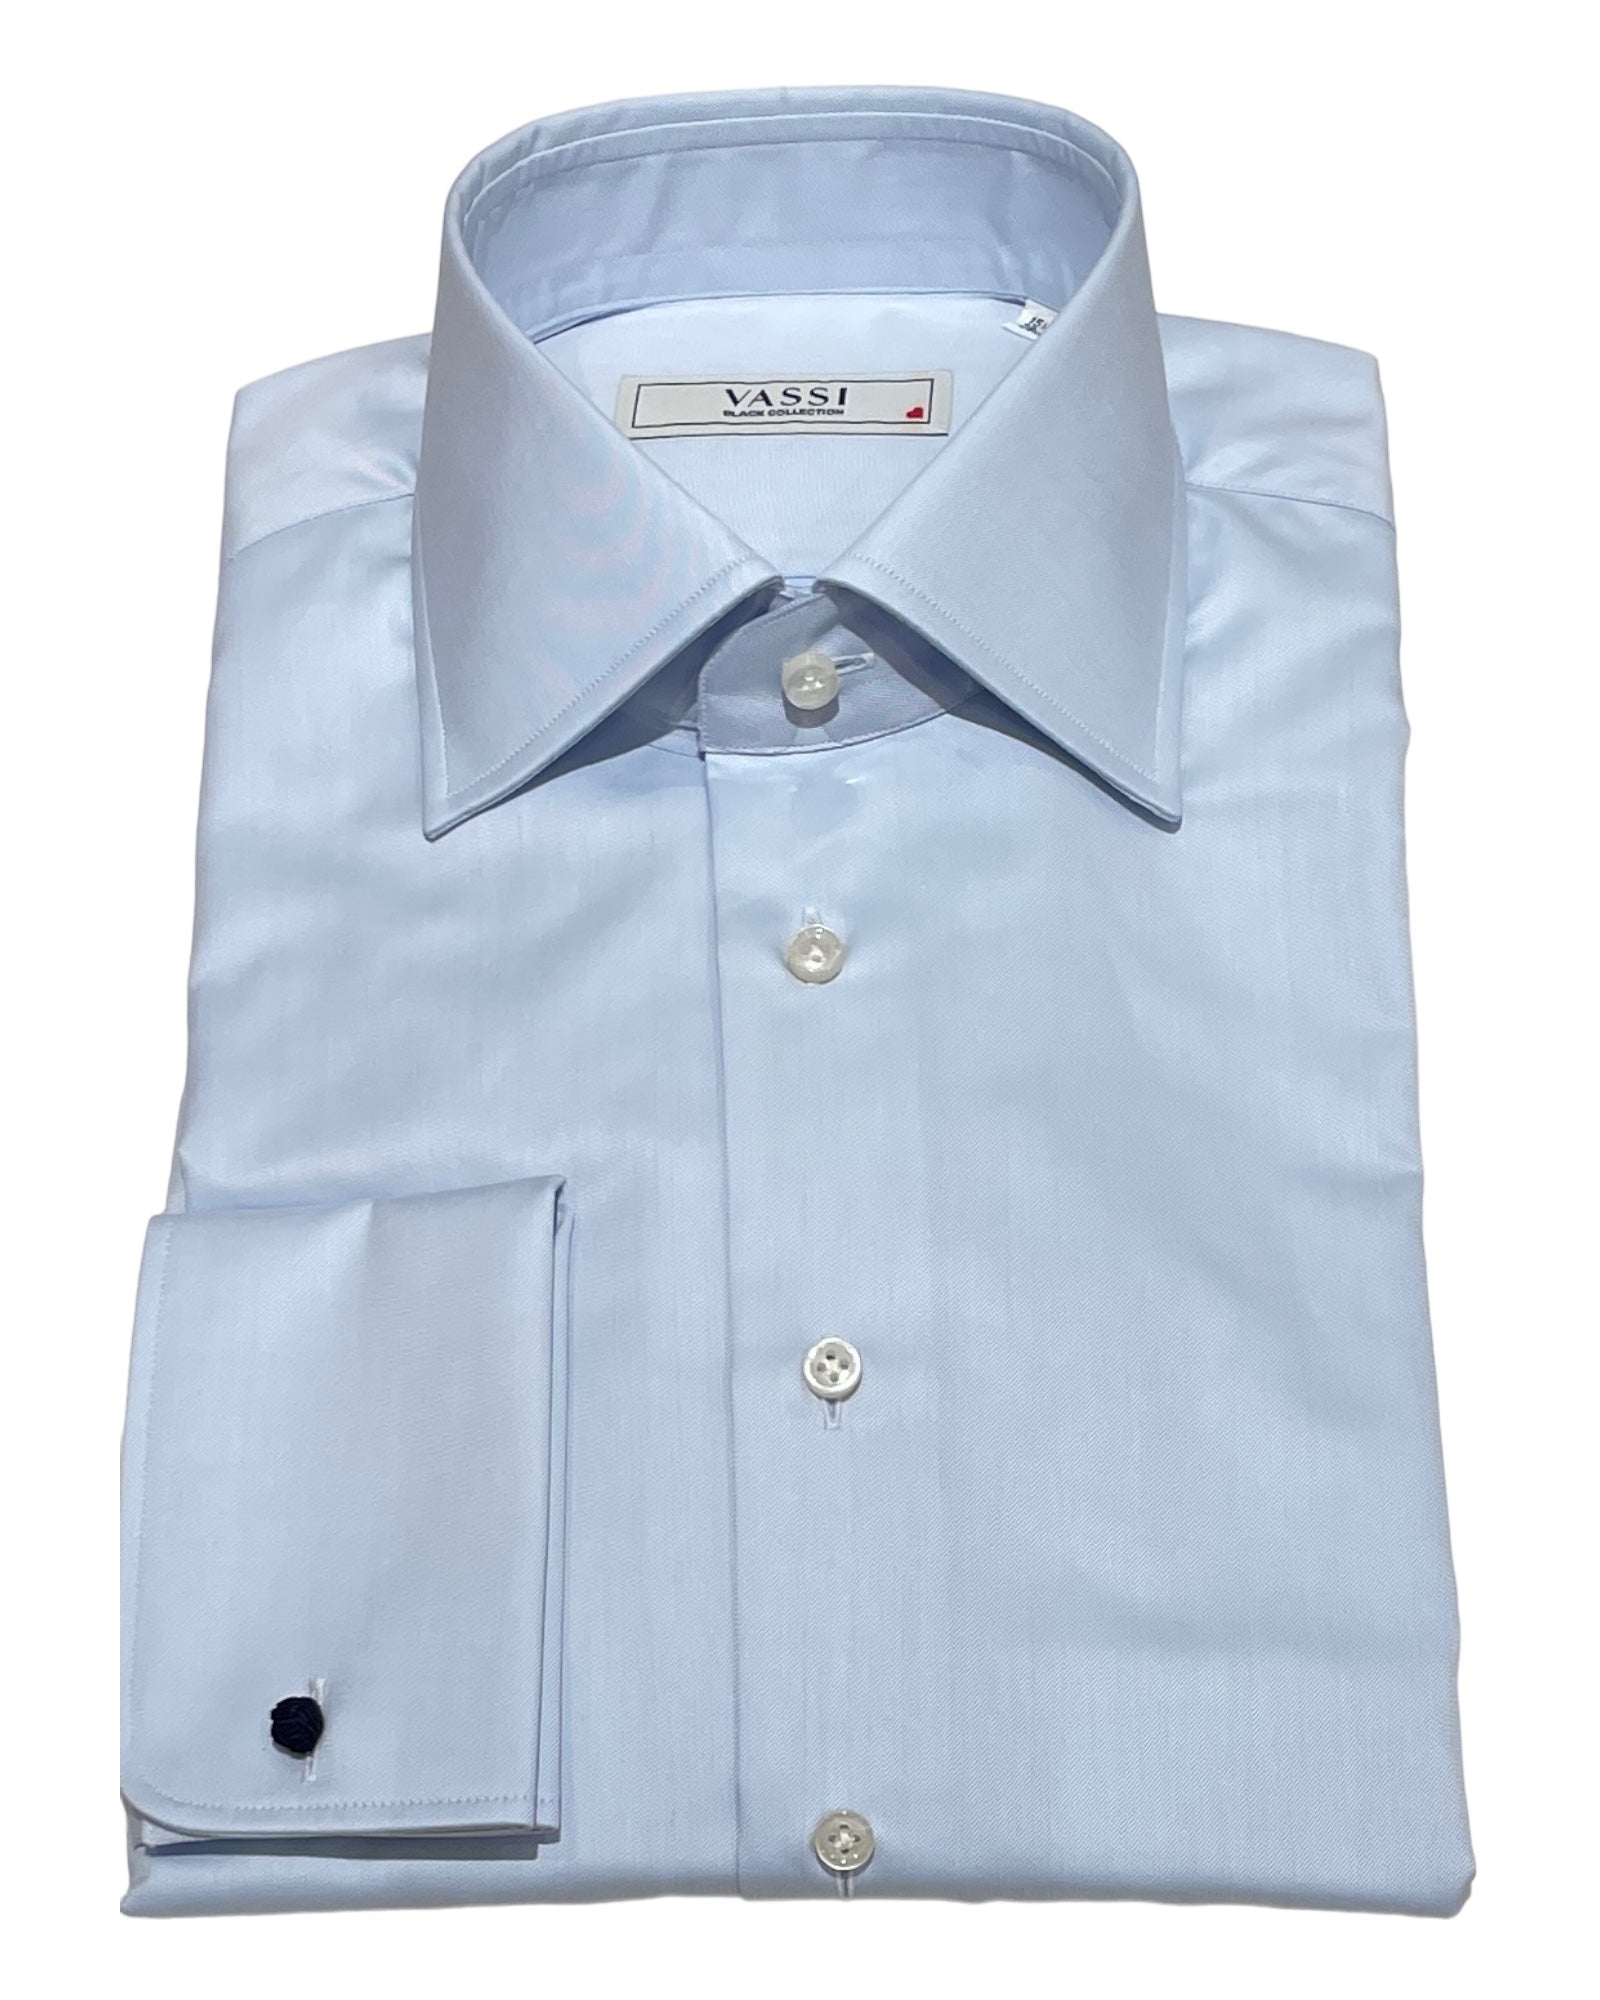 Essential Classic French Cuff Dress Shirt - Plain Blue DRESS SHIRTS15.5